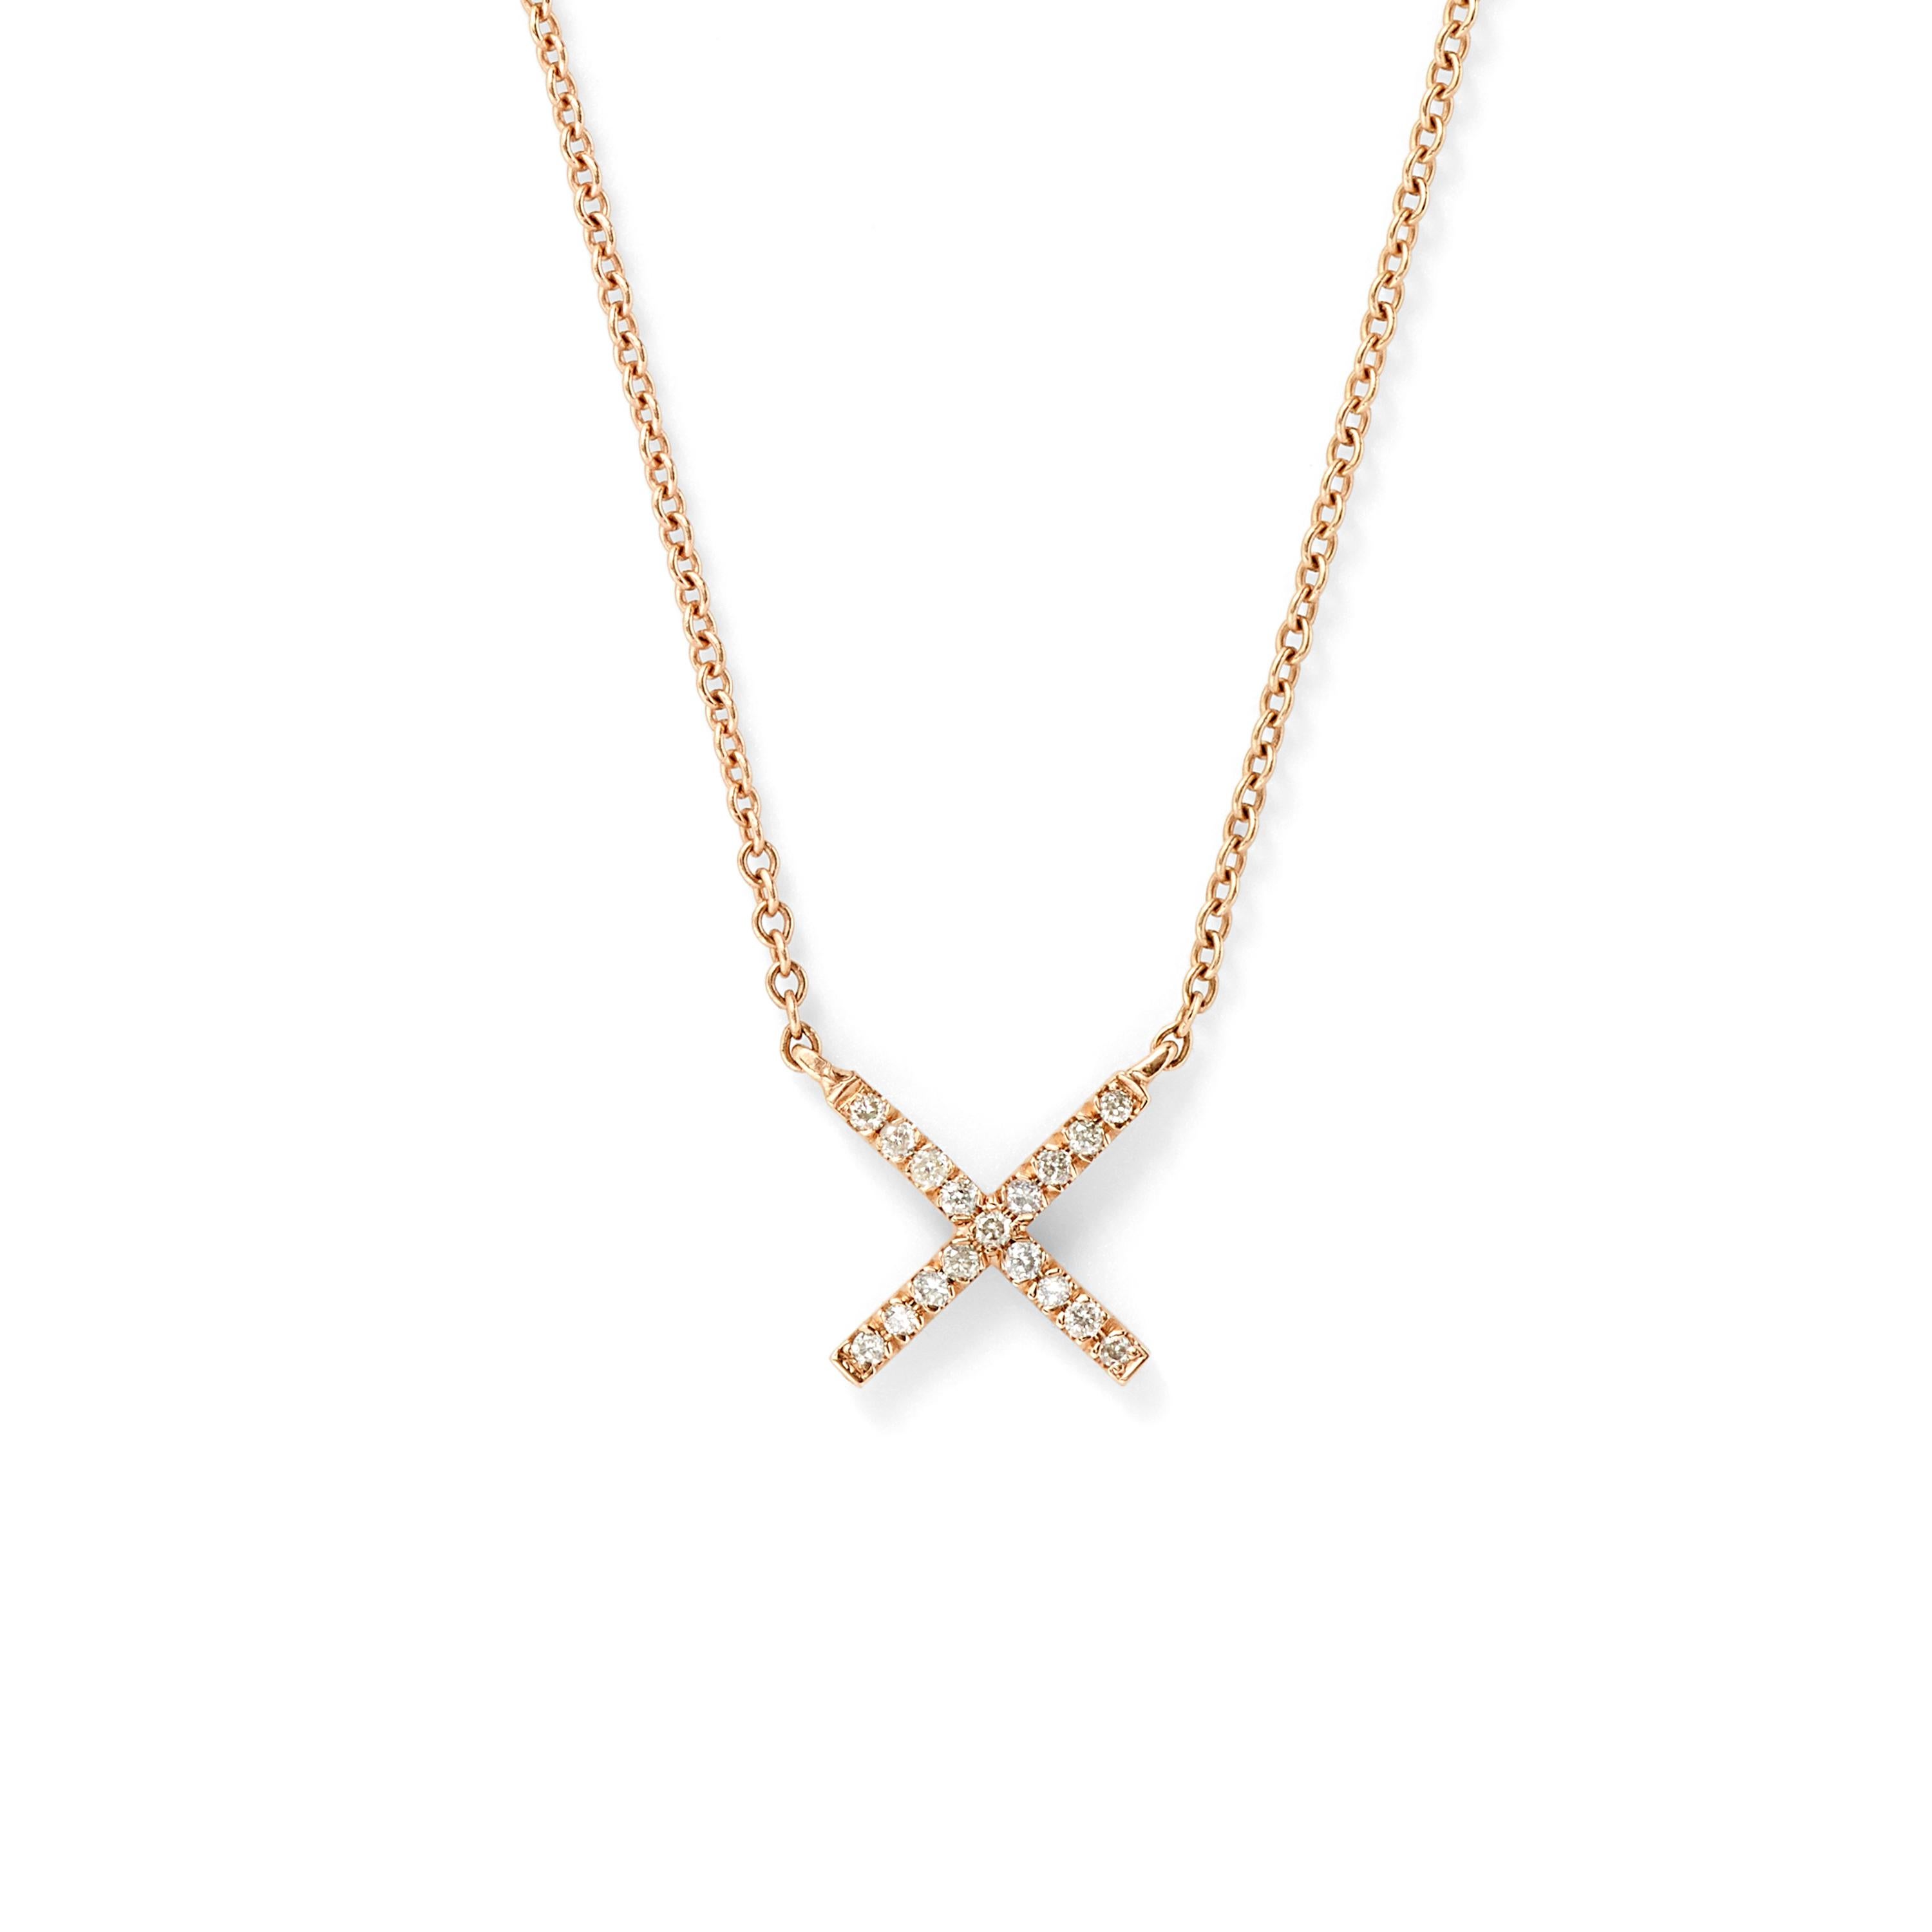 Contemporary Eva Fehren Tiny X-Pendant in 18K Rose Gold with Pale Champagne Diamonds For Sale